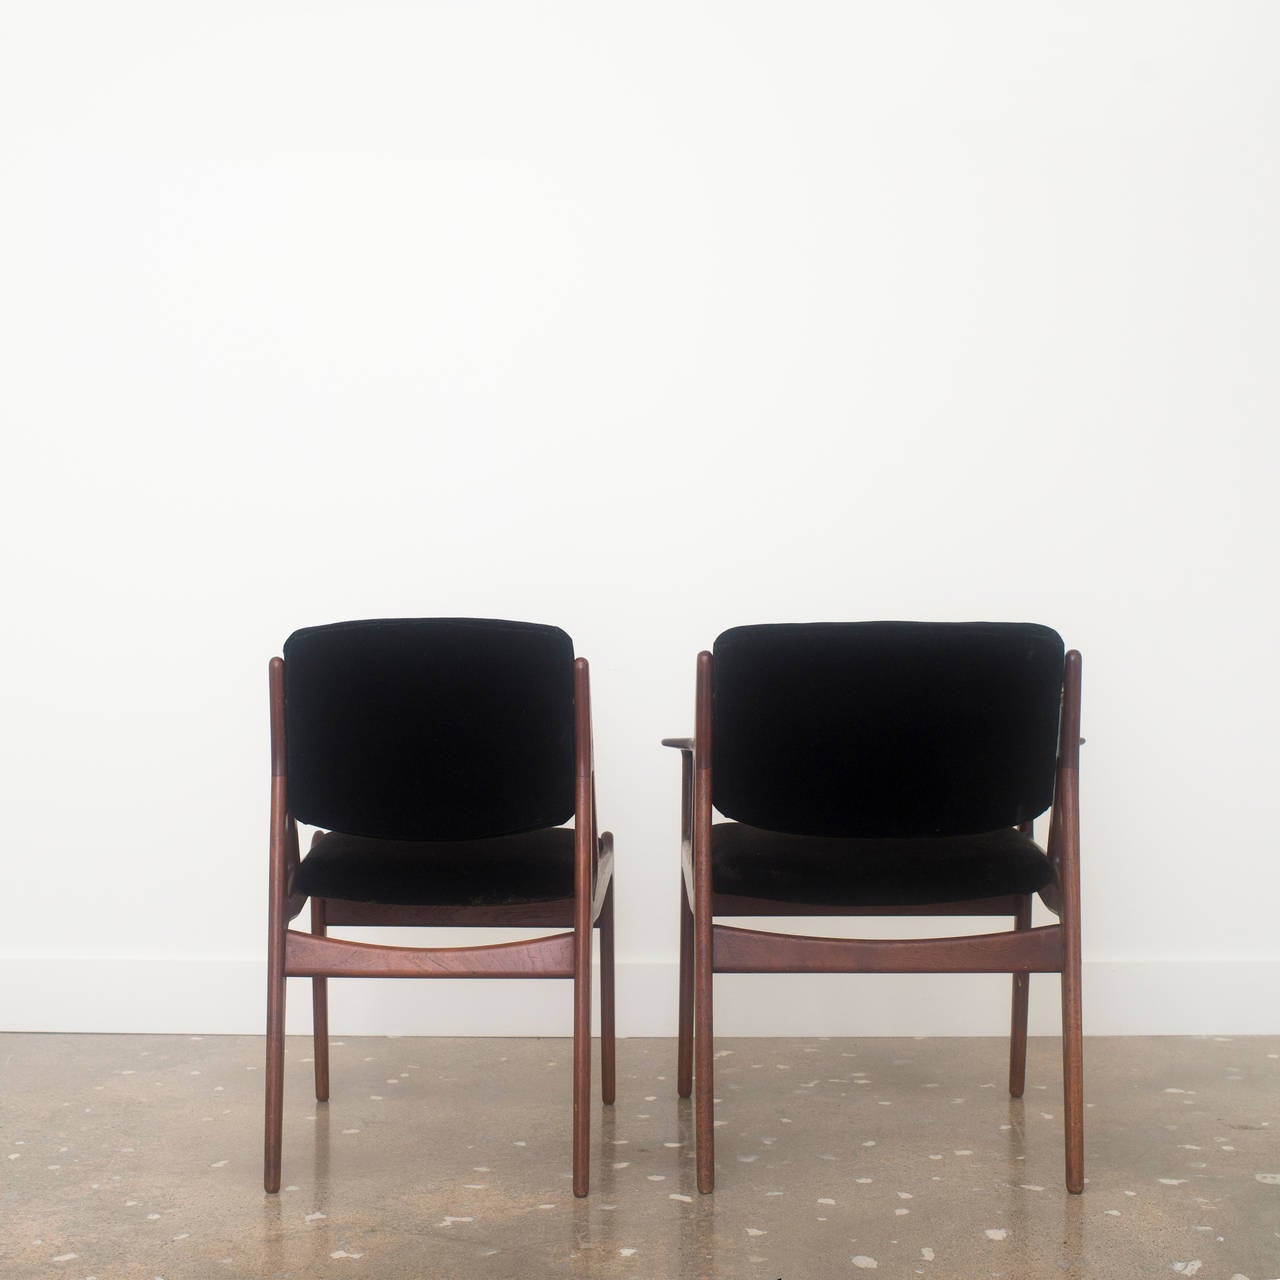 Mid-20th Century Arne Vodder for Vamo Dining Chairs Upholstered in Black Mohair